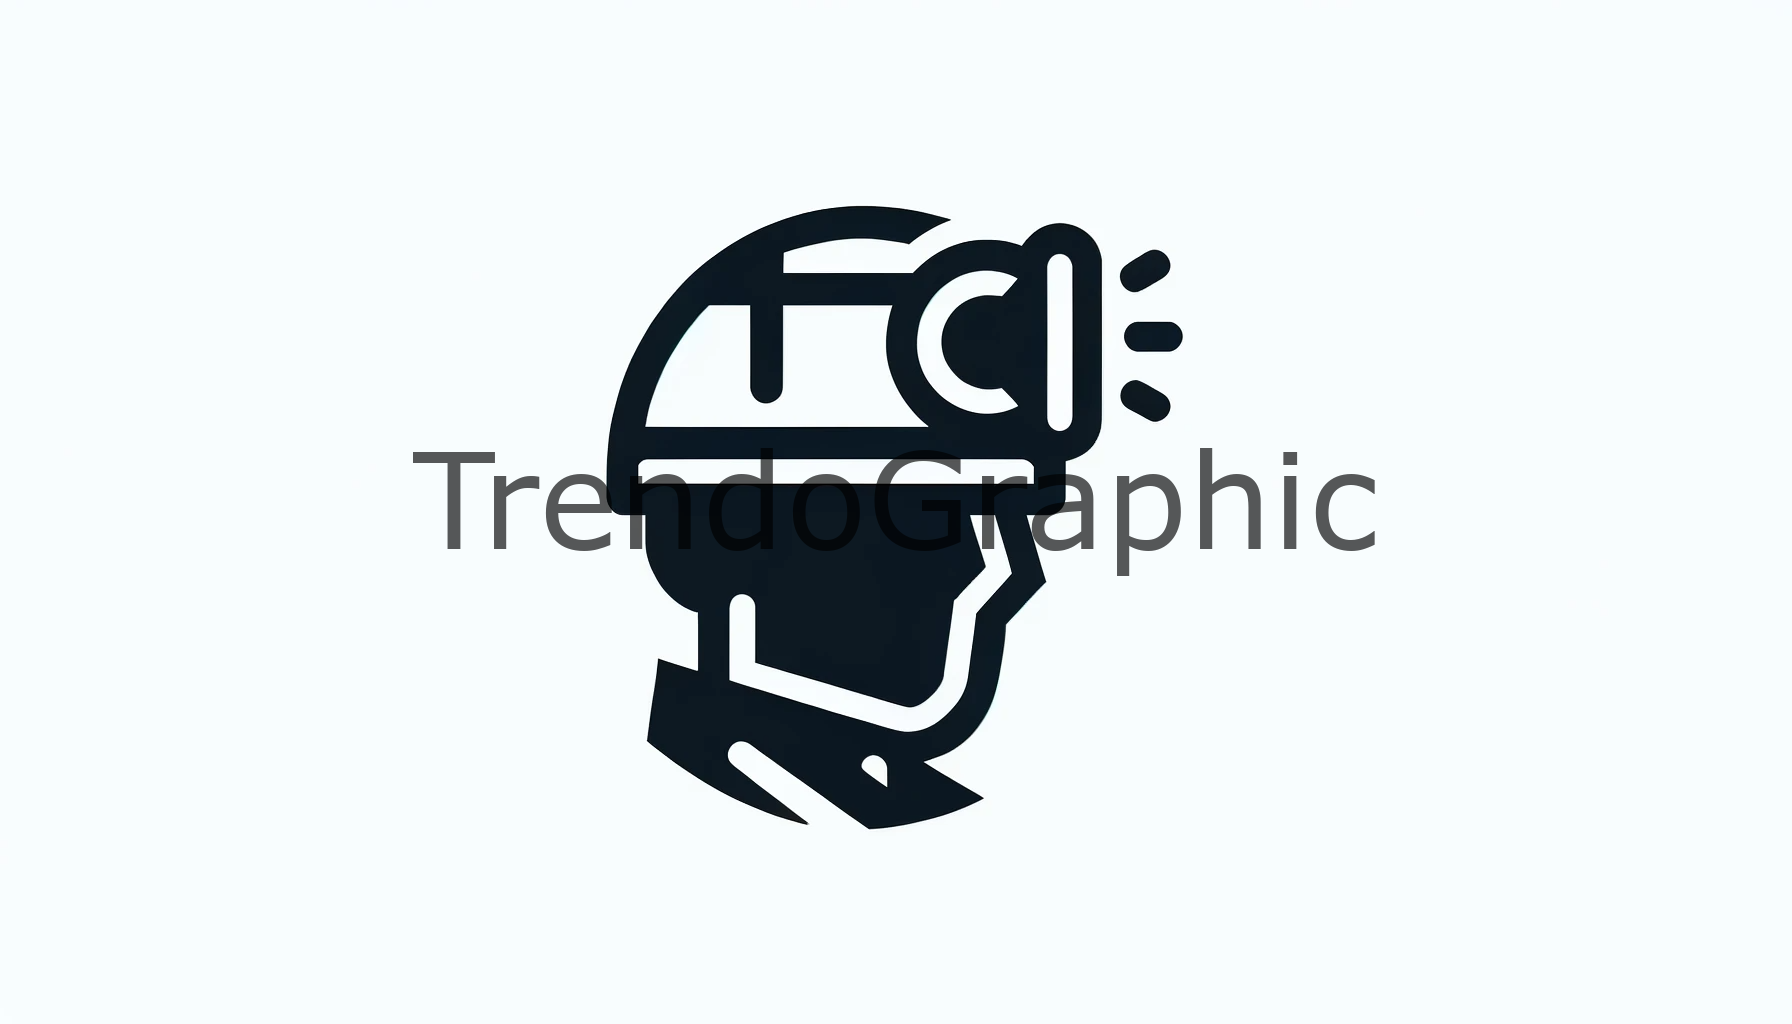 Mining Iconography: The Helmet Emblem